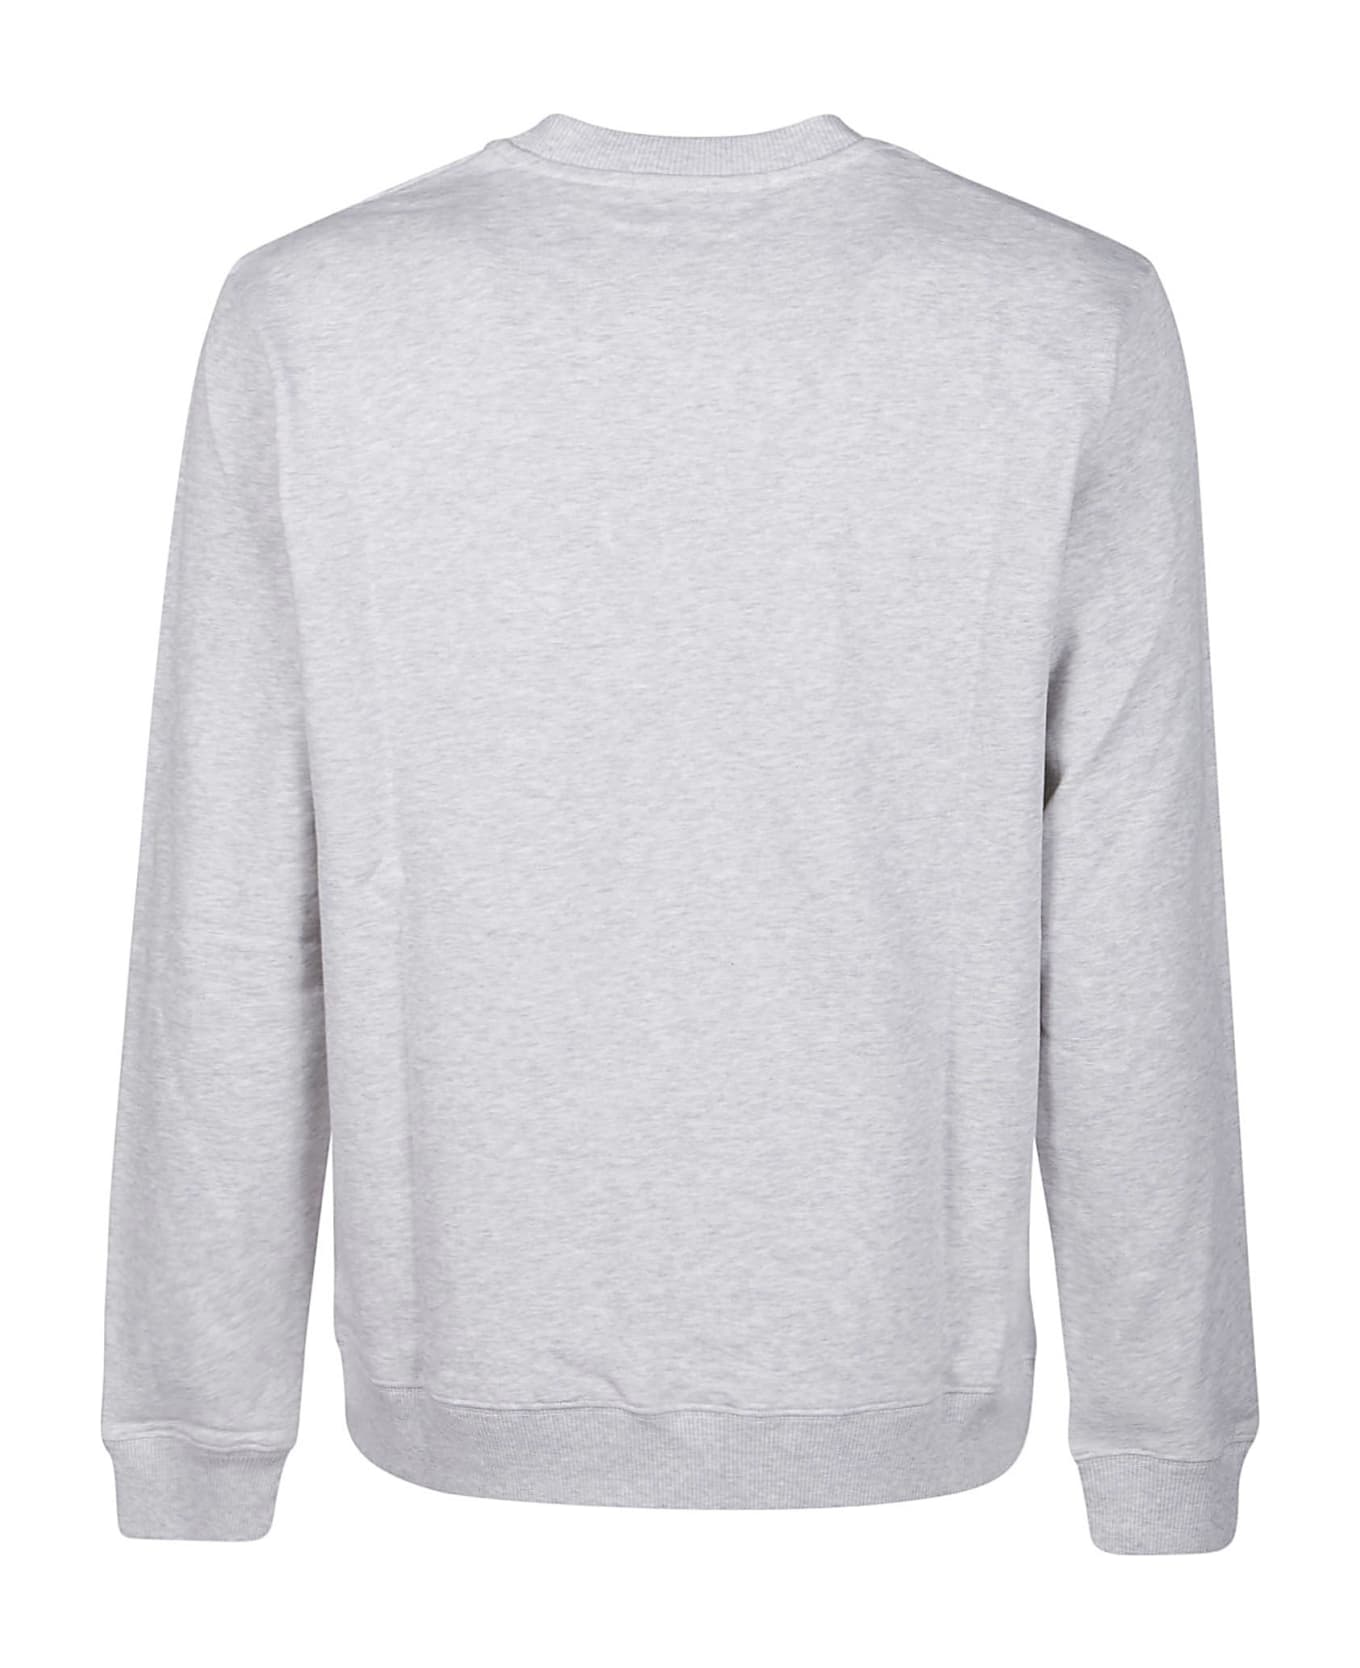 MSGM Round Neck Sweatshirt - Light Grey